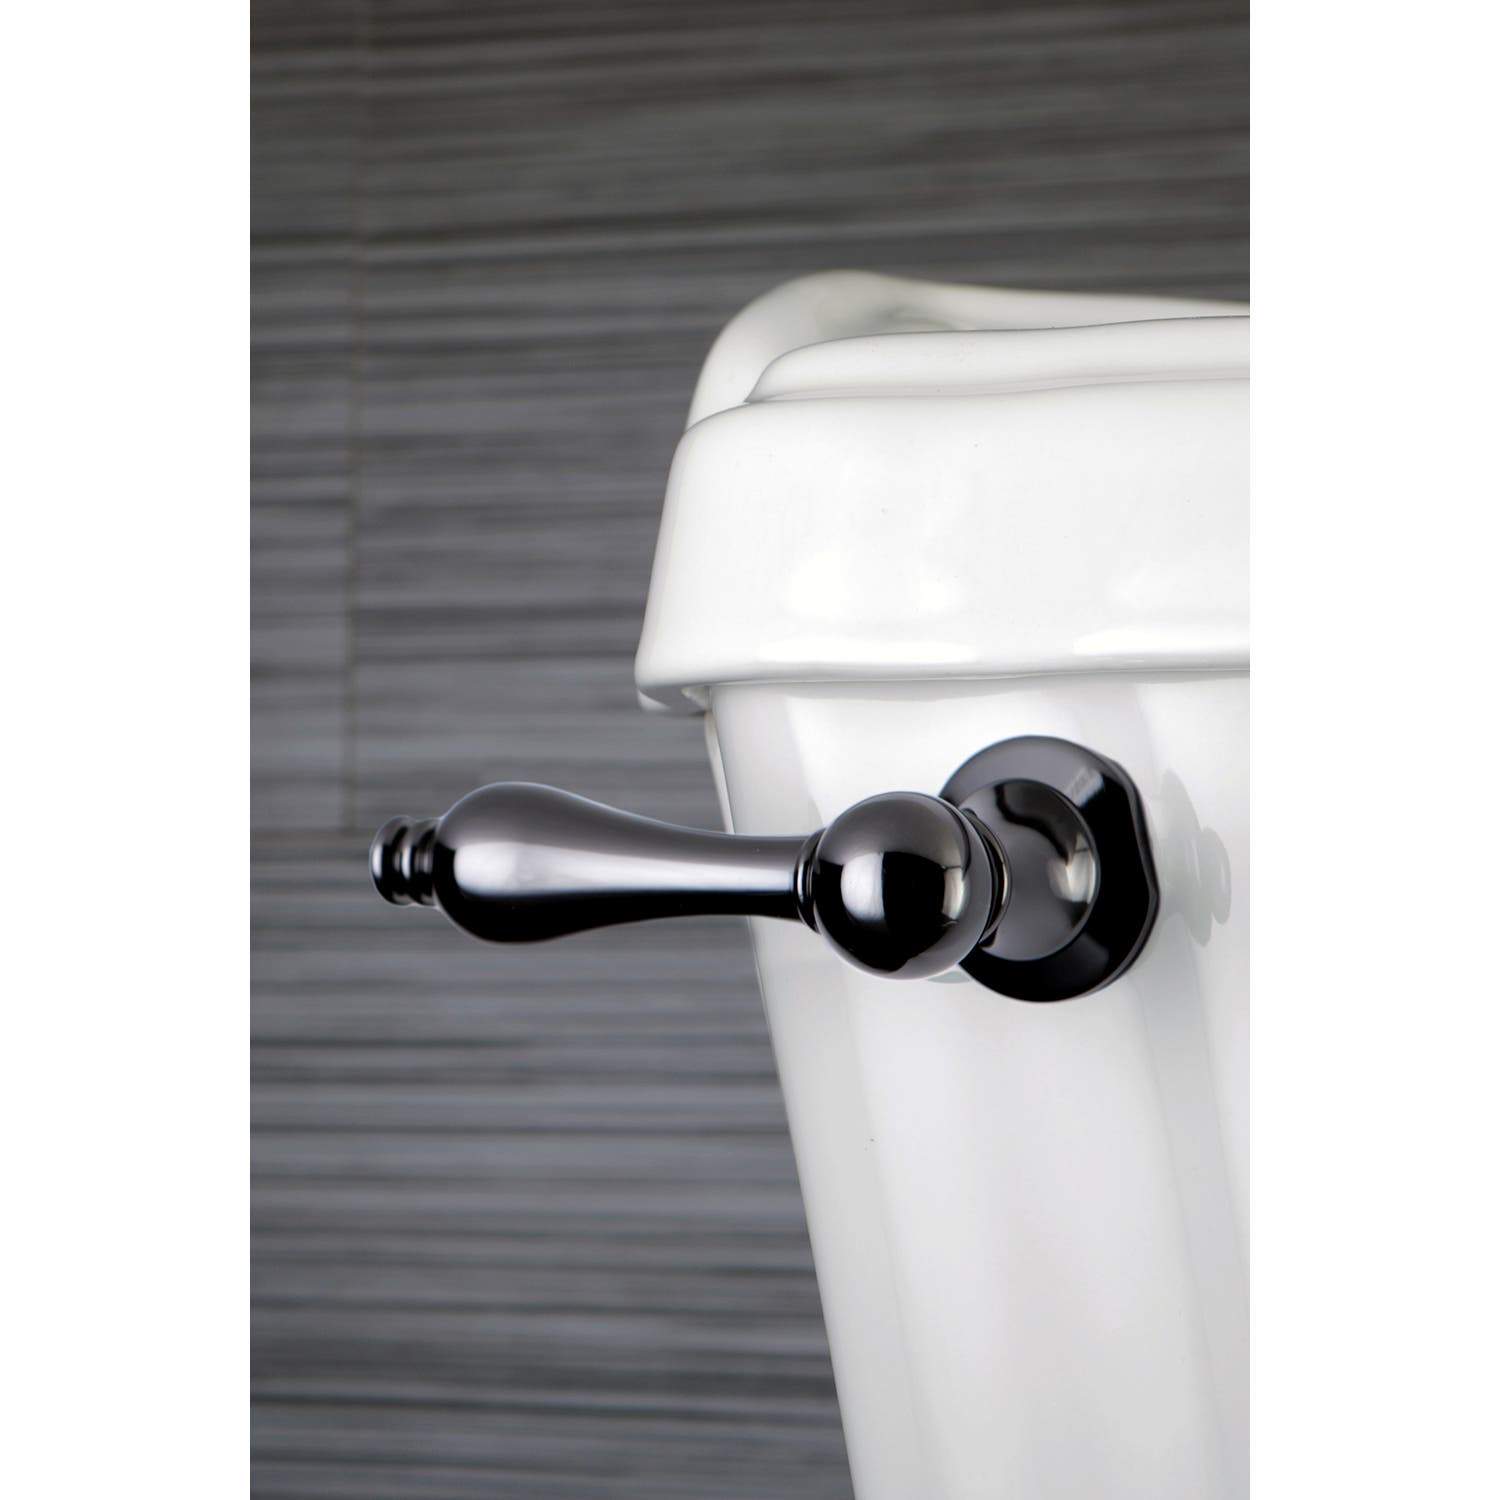 Kingston Brass NKTAL Water Onyx Toilet Tank Lever in Black Stainless Steel